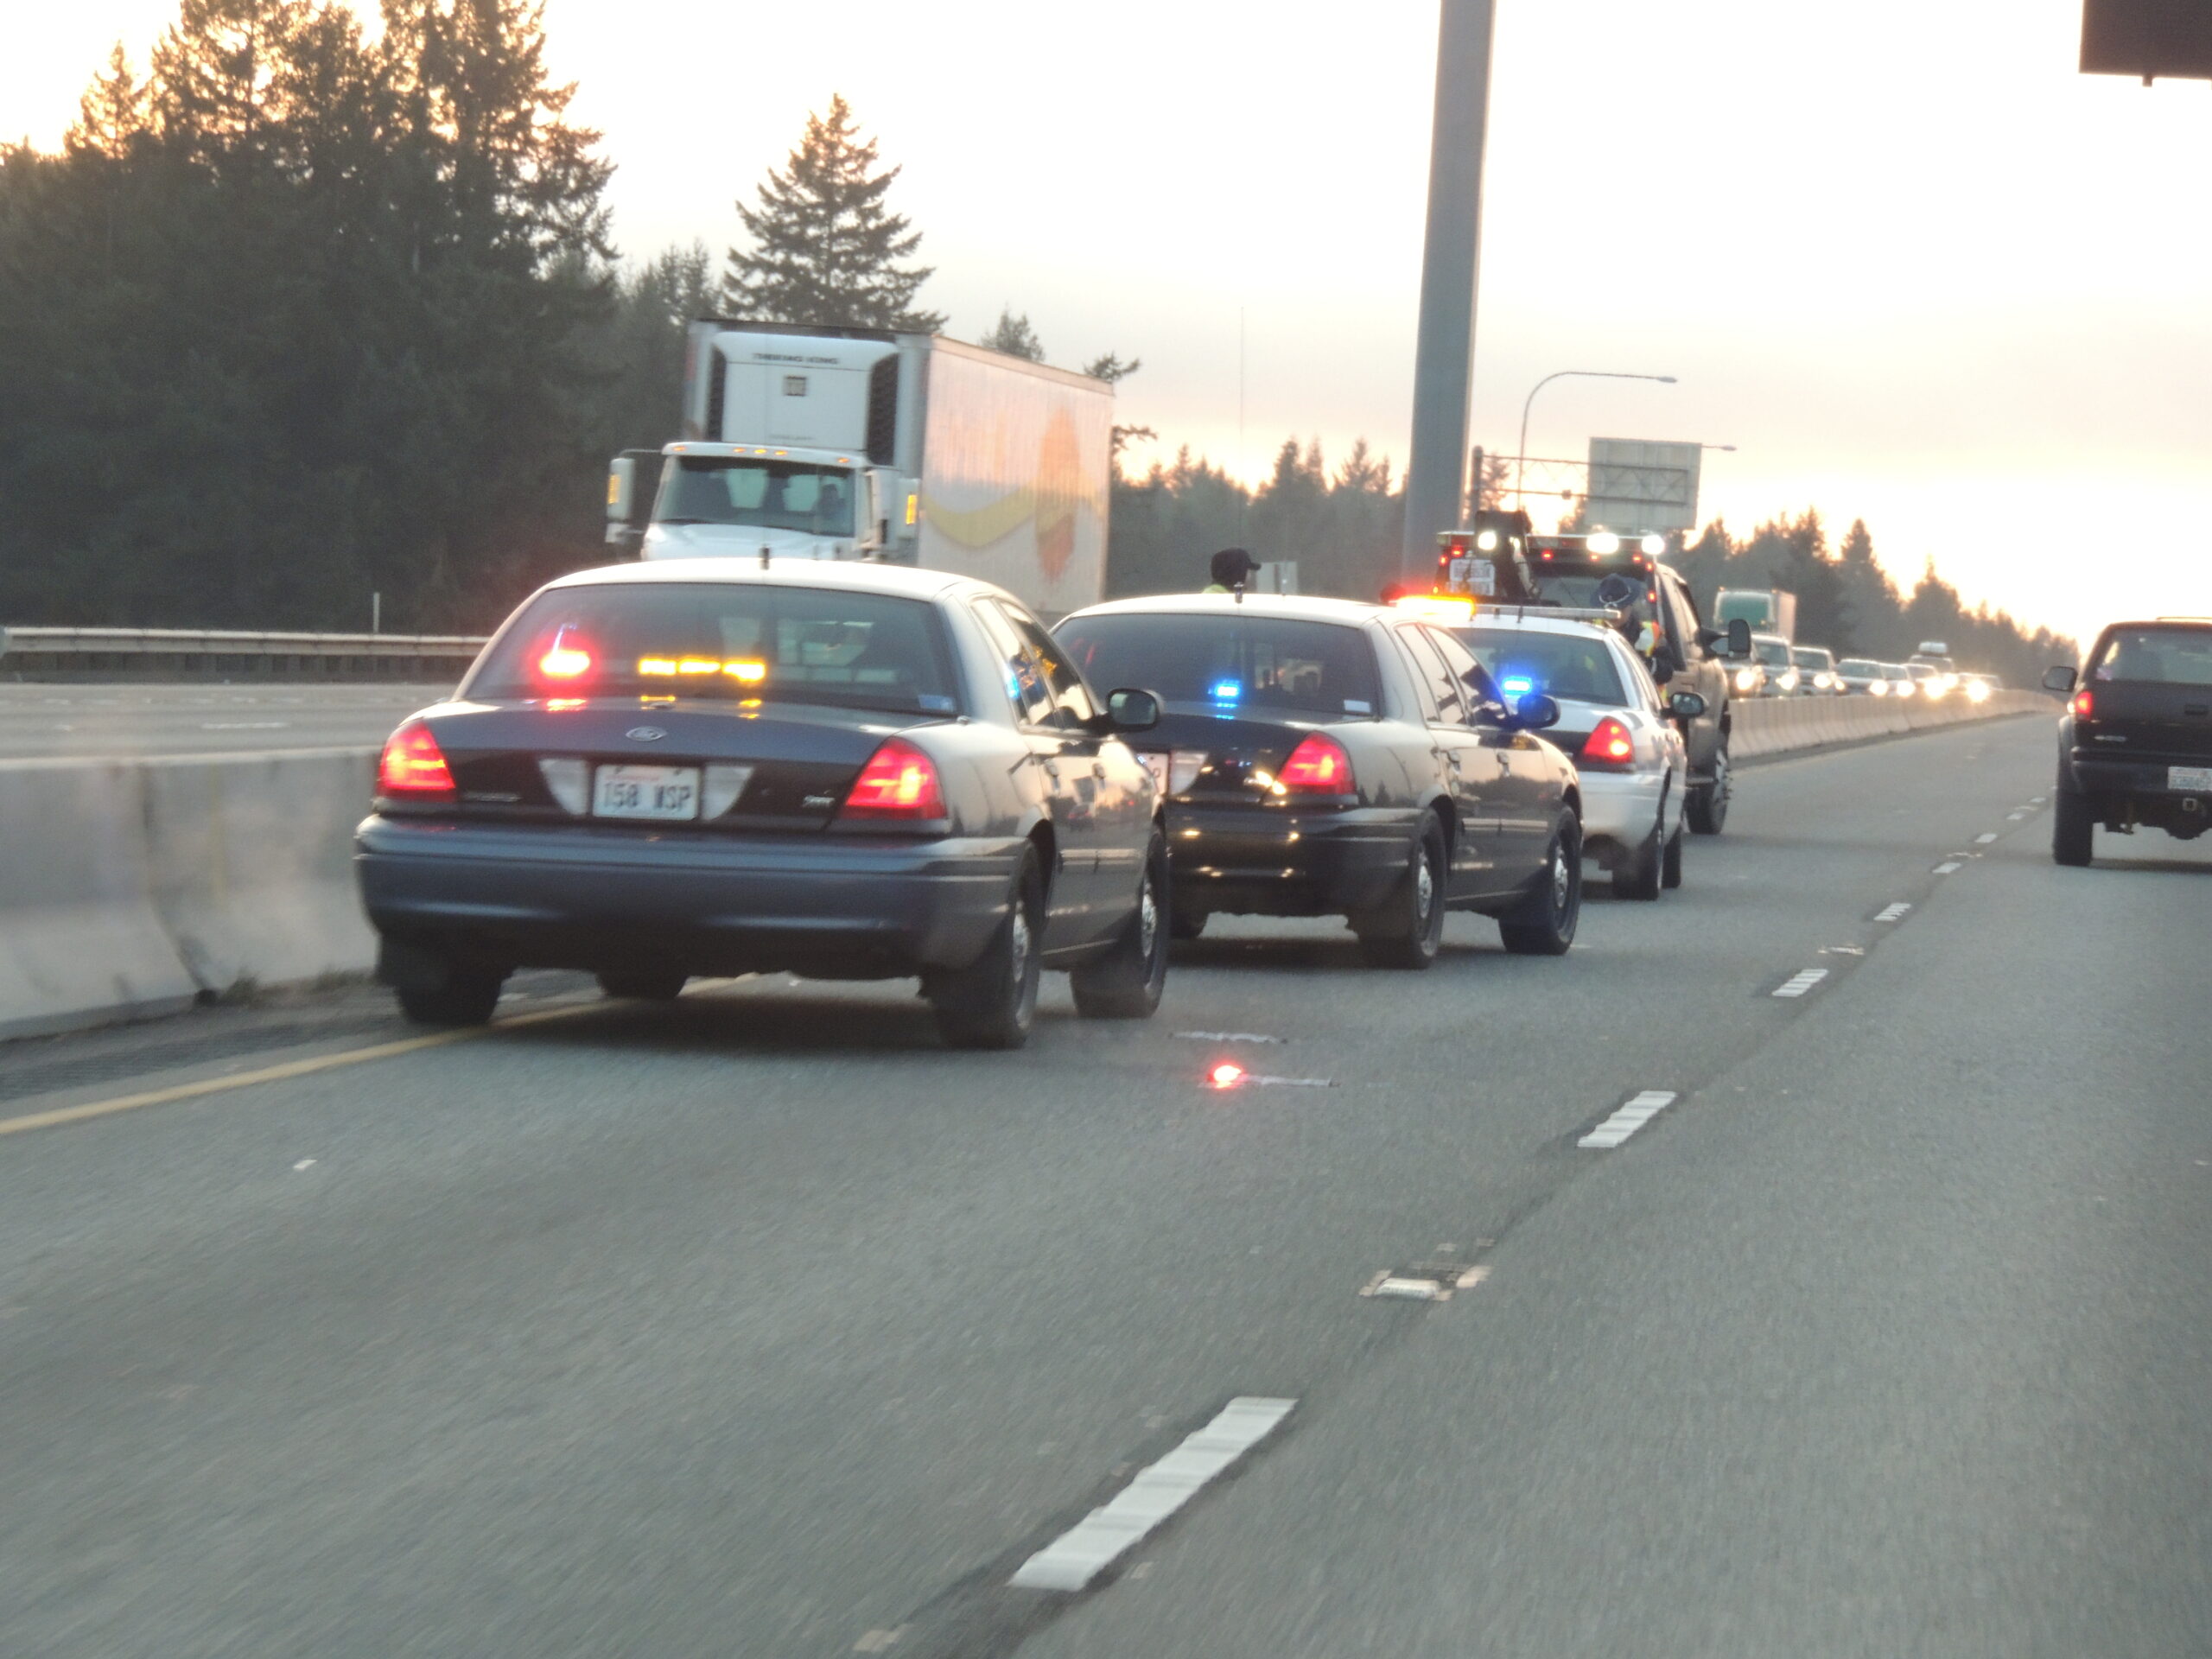 Washington State Patrol vehicles